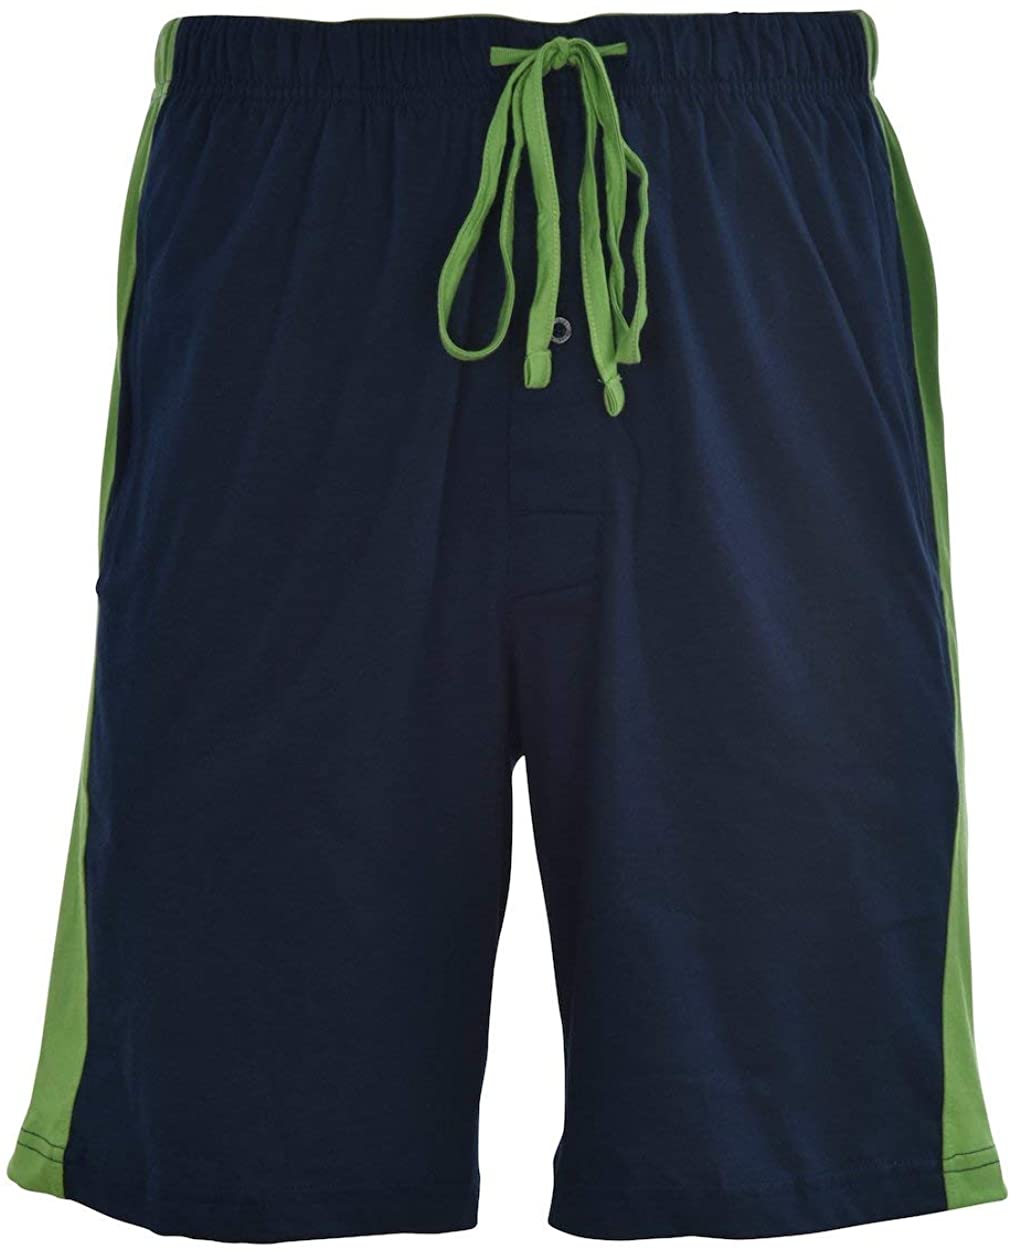 Hanes Men's 2-Pack Knit Sleep Pajama Drawstring Shorts | eBay